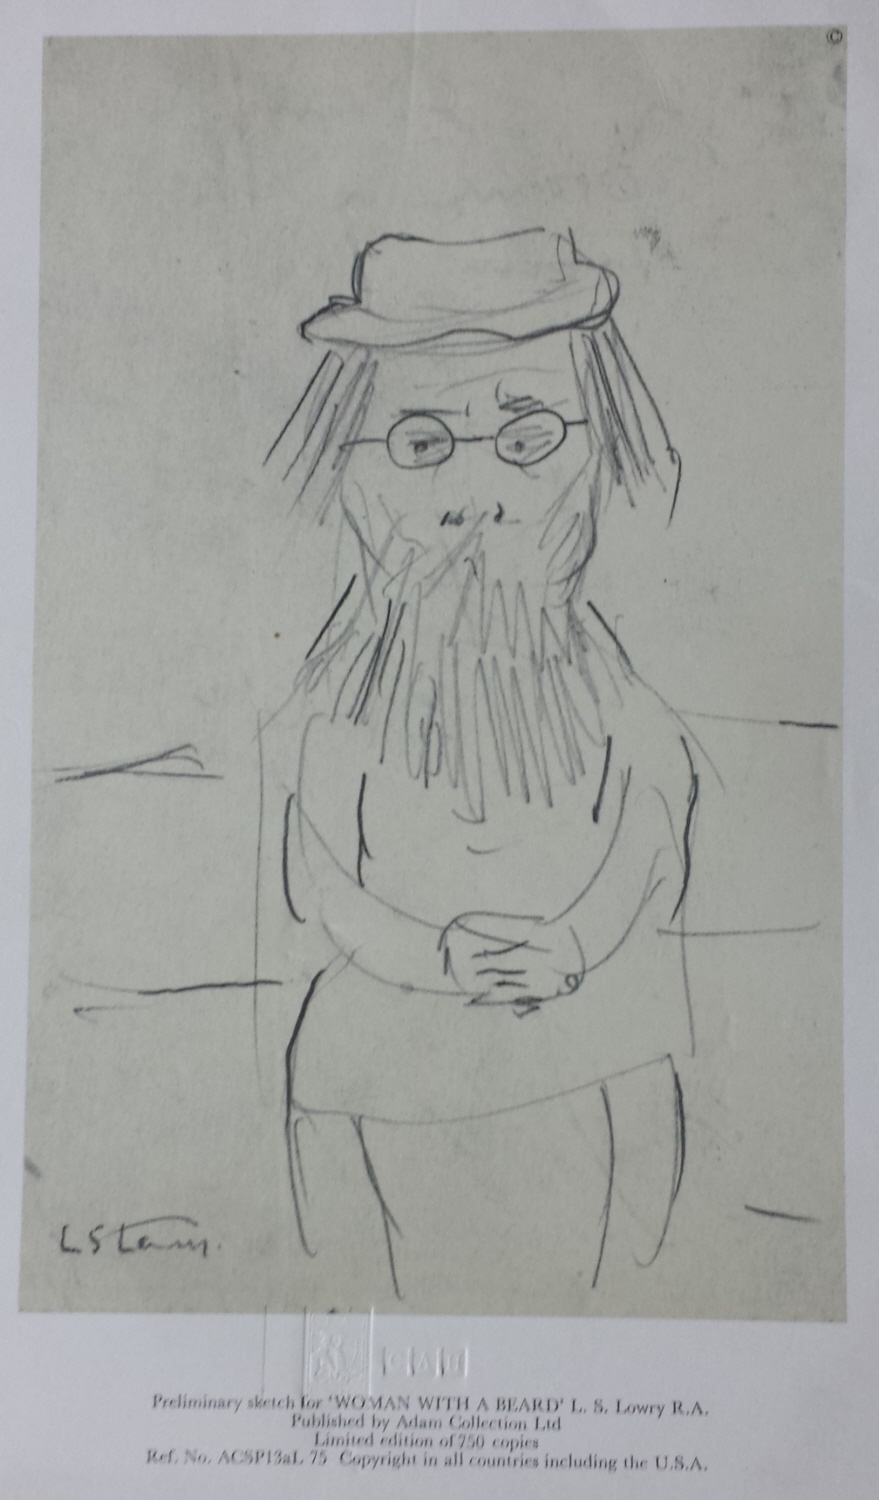 lowry woman with beard sketch signed print lslowry